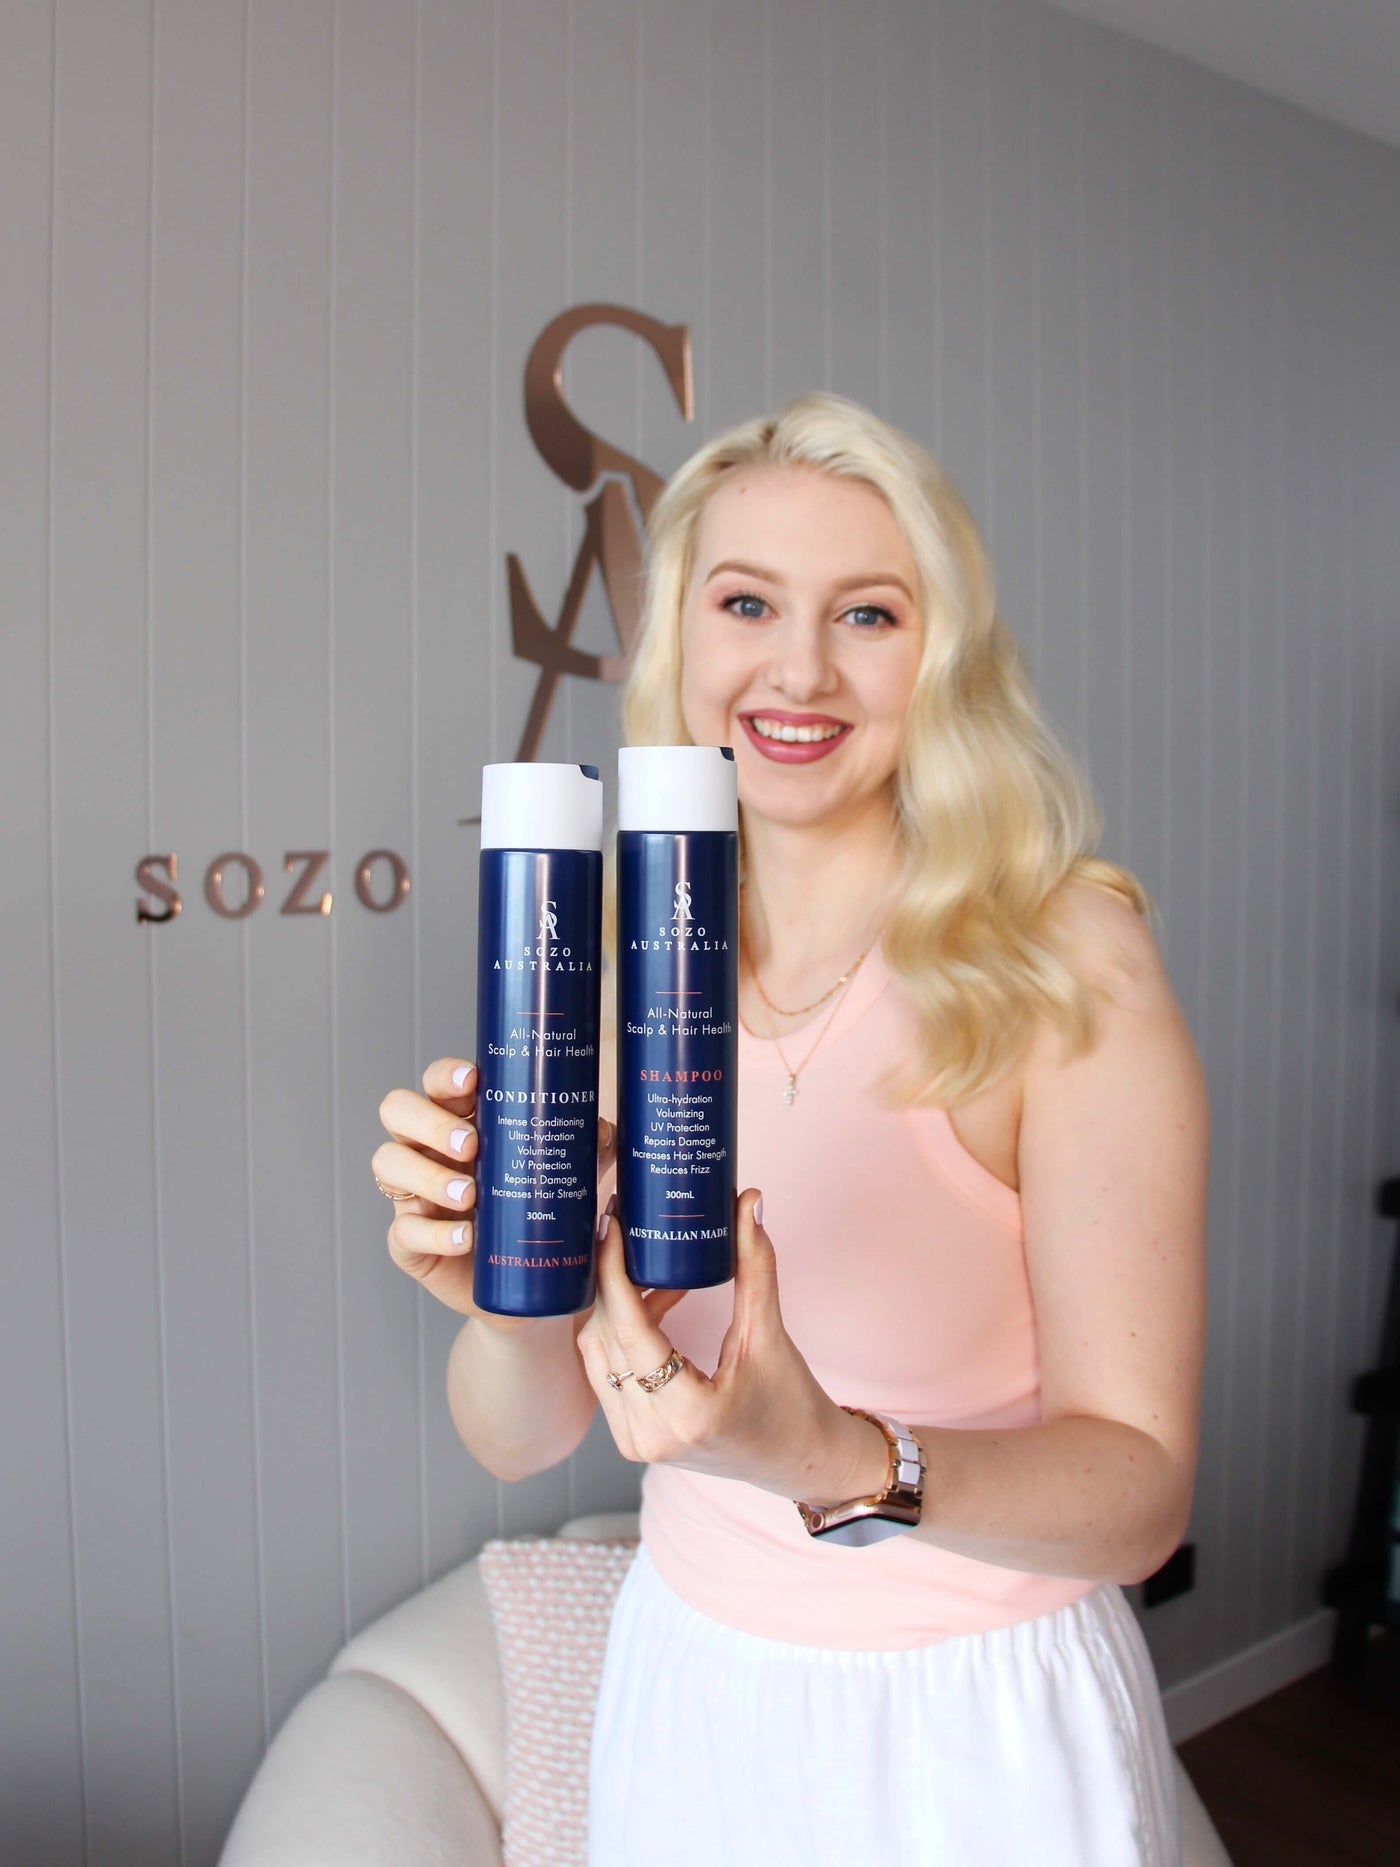 Sozo Australia founder holding Sozo Hair Health Shampoo and Conditioner bottles